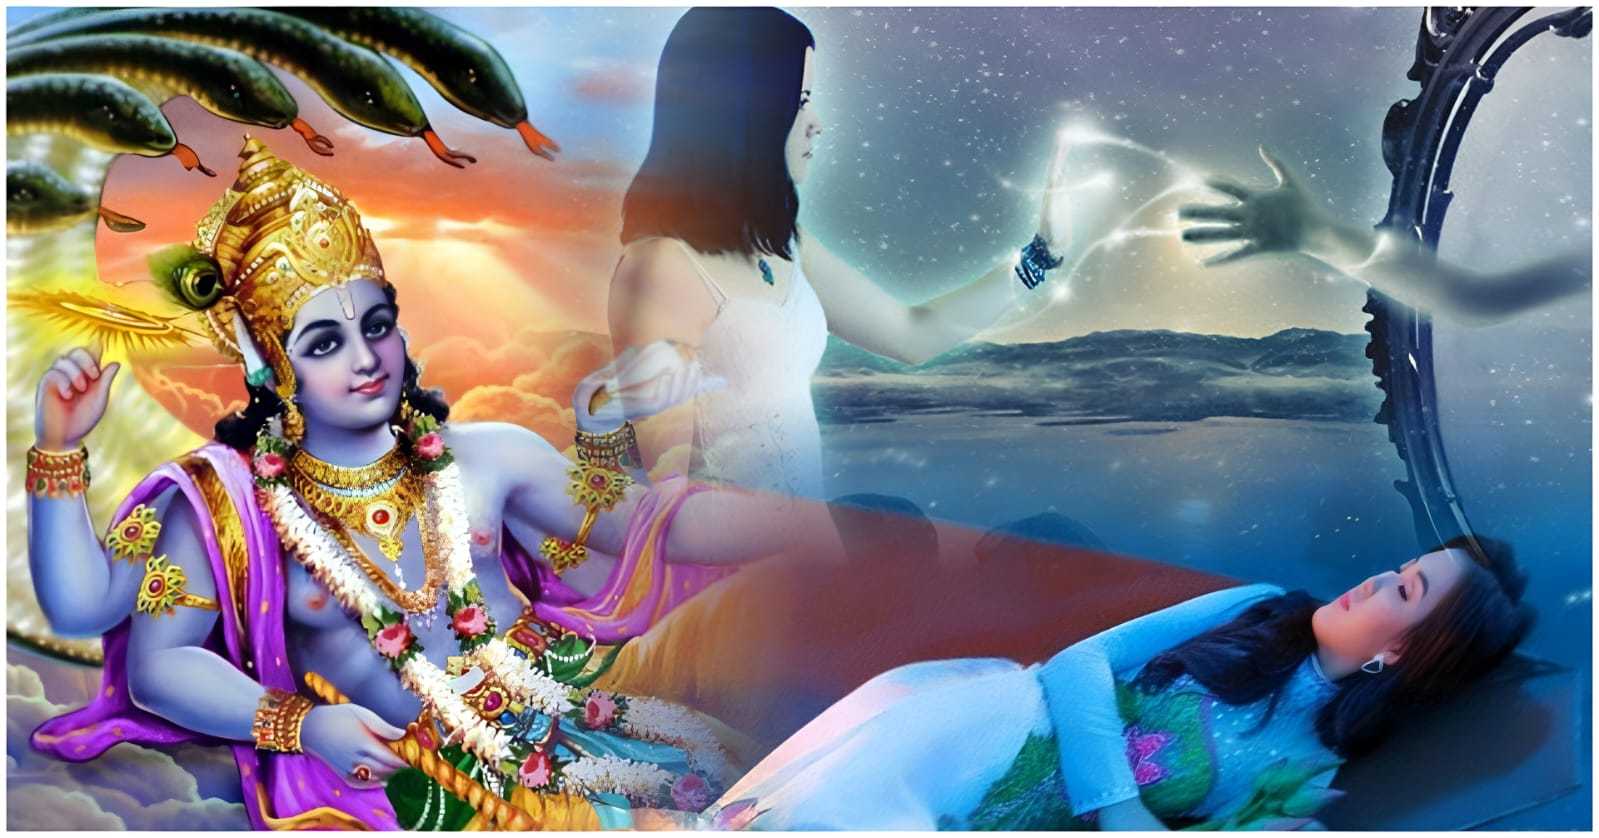 Vishnu god and dreaming girl images